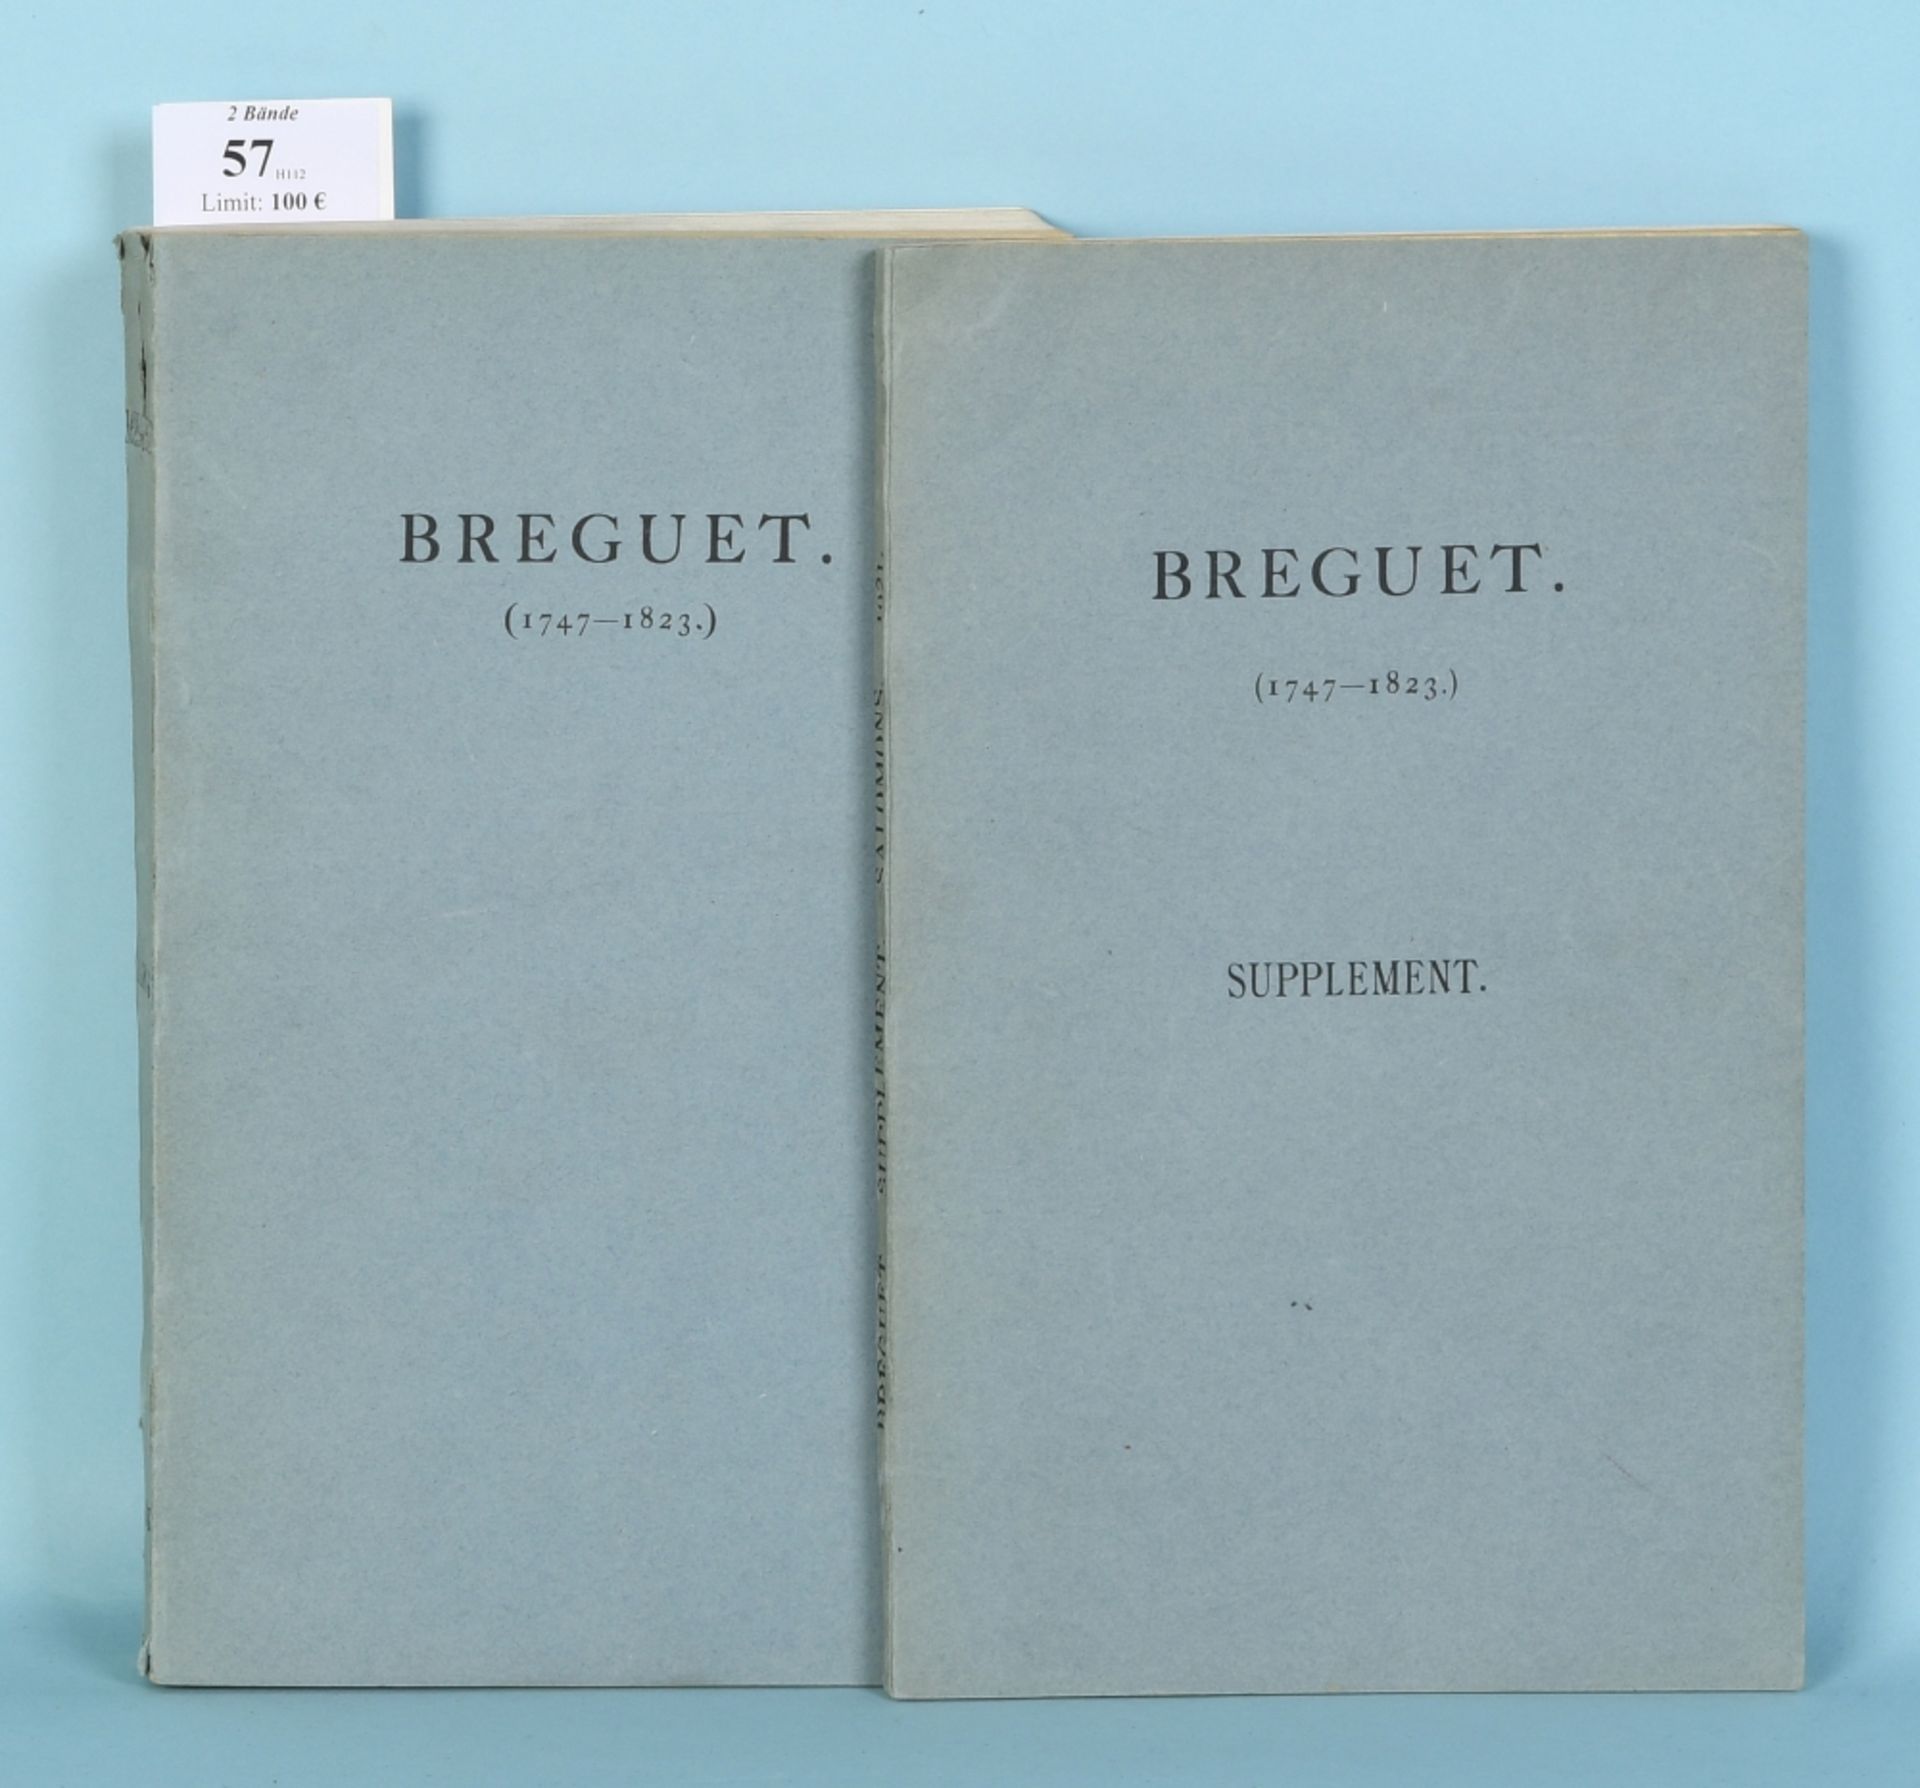 Salomons, David L. "Breguet 1747-1823", 2 Bände